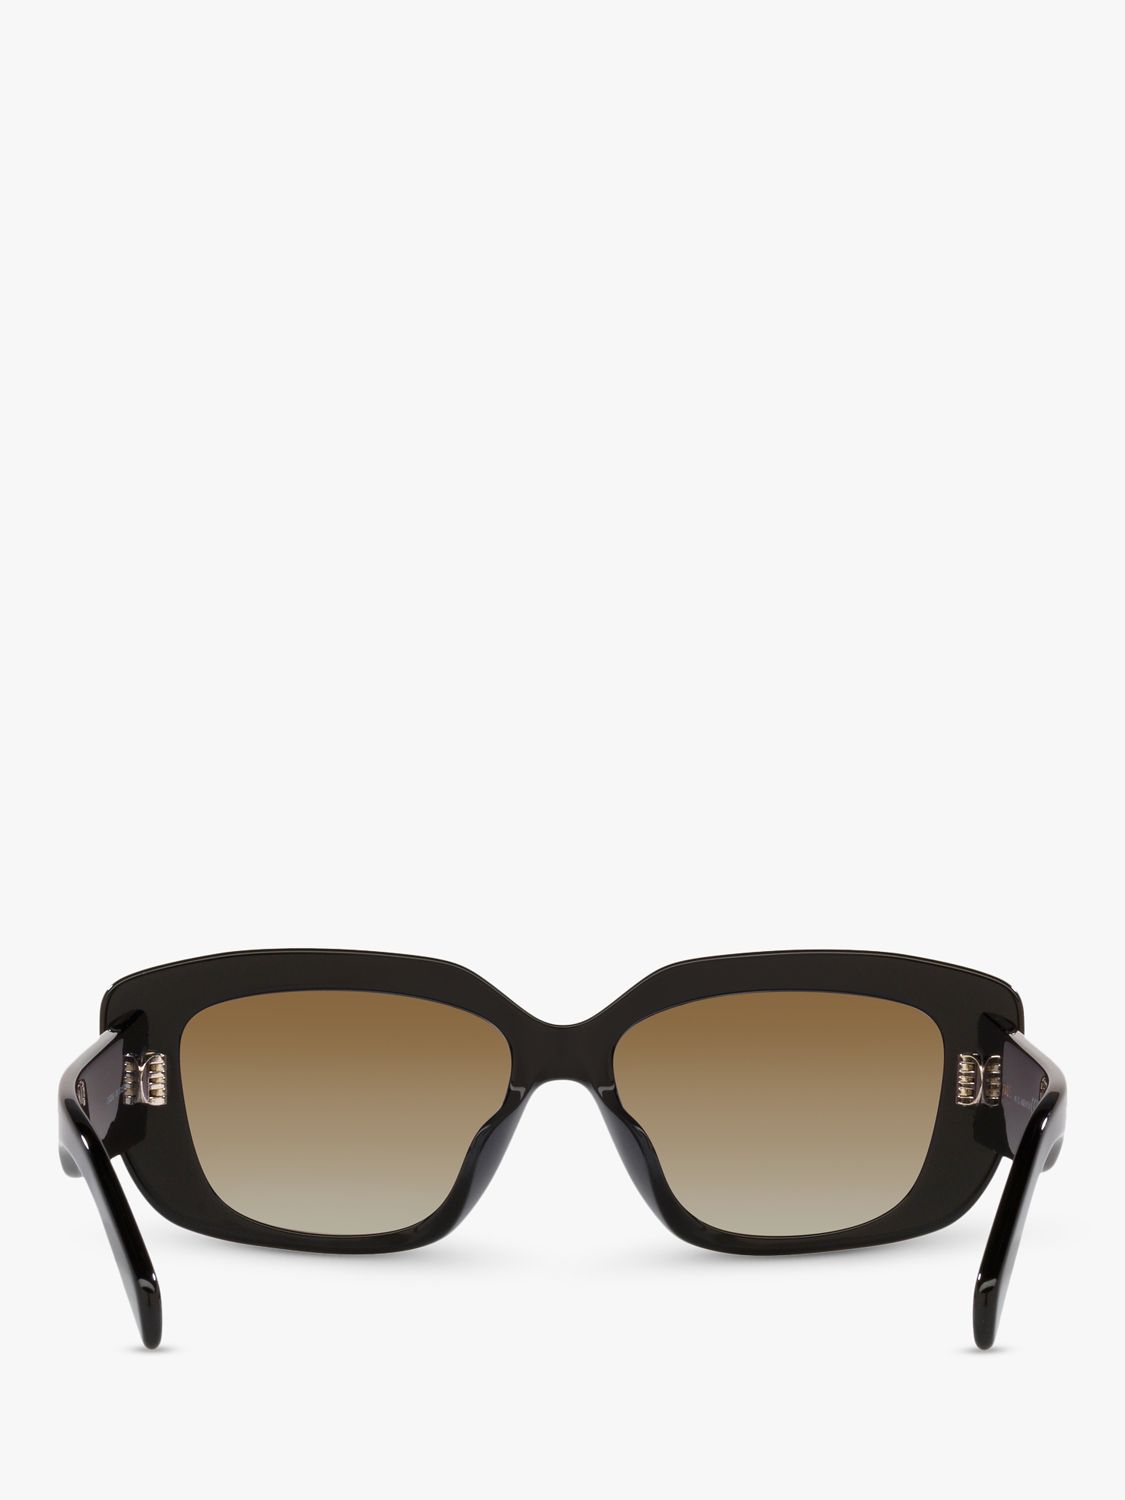 Buy Celine CL40216U Women's Rectangular Sunglasses, Black/Brown Gradient Online at johnlewis.com